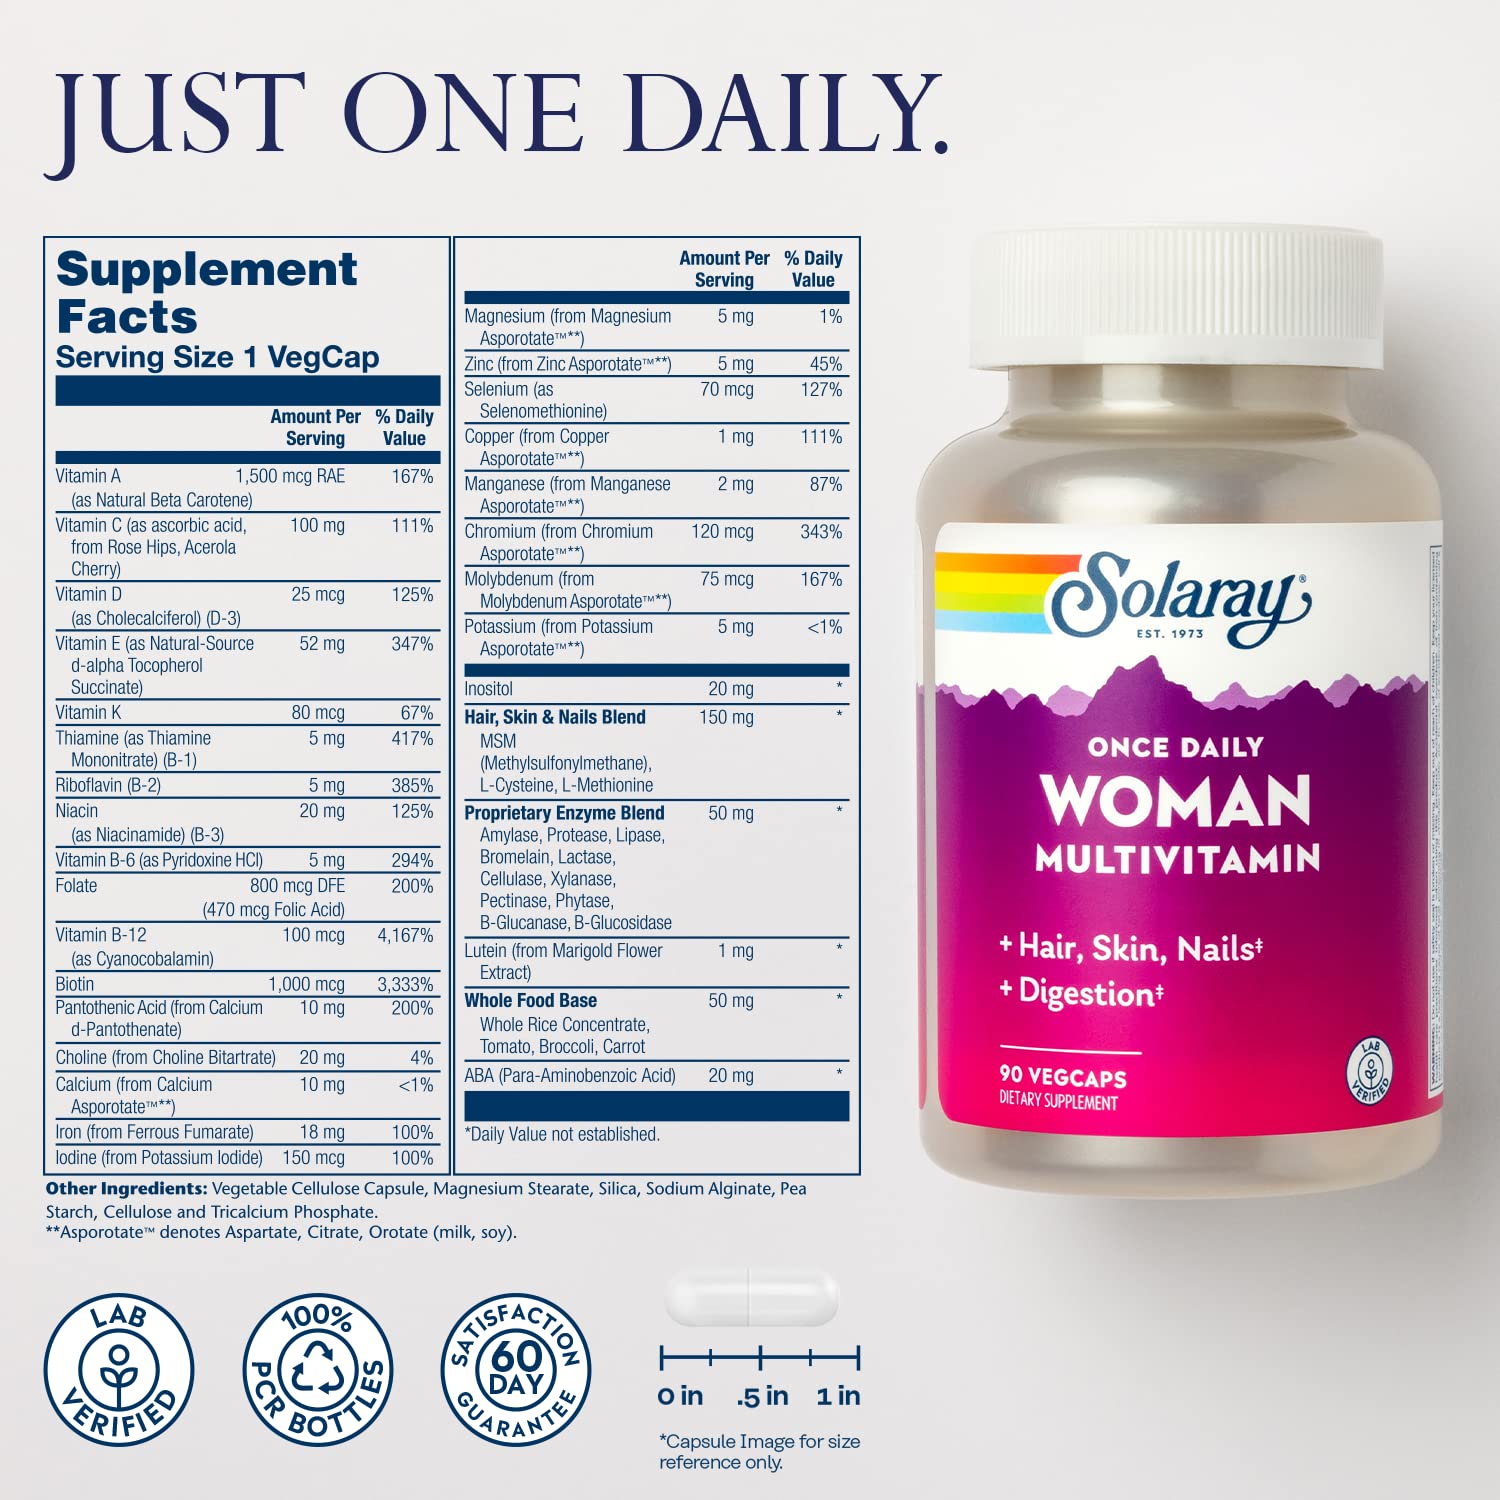 Solaray Once Daily Woman Multi-Vitamin 90ct VegCap